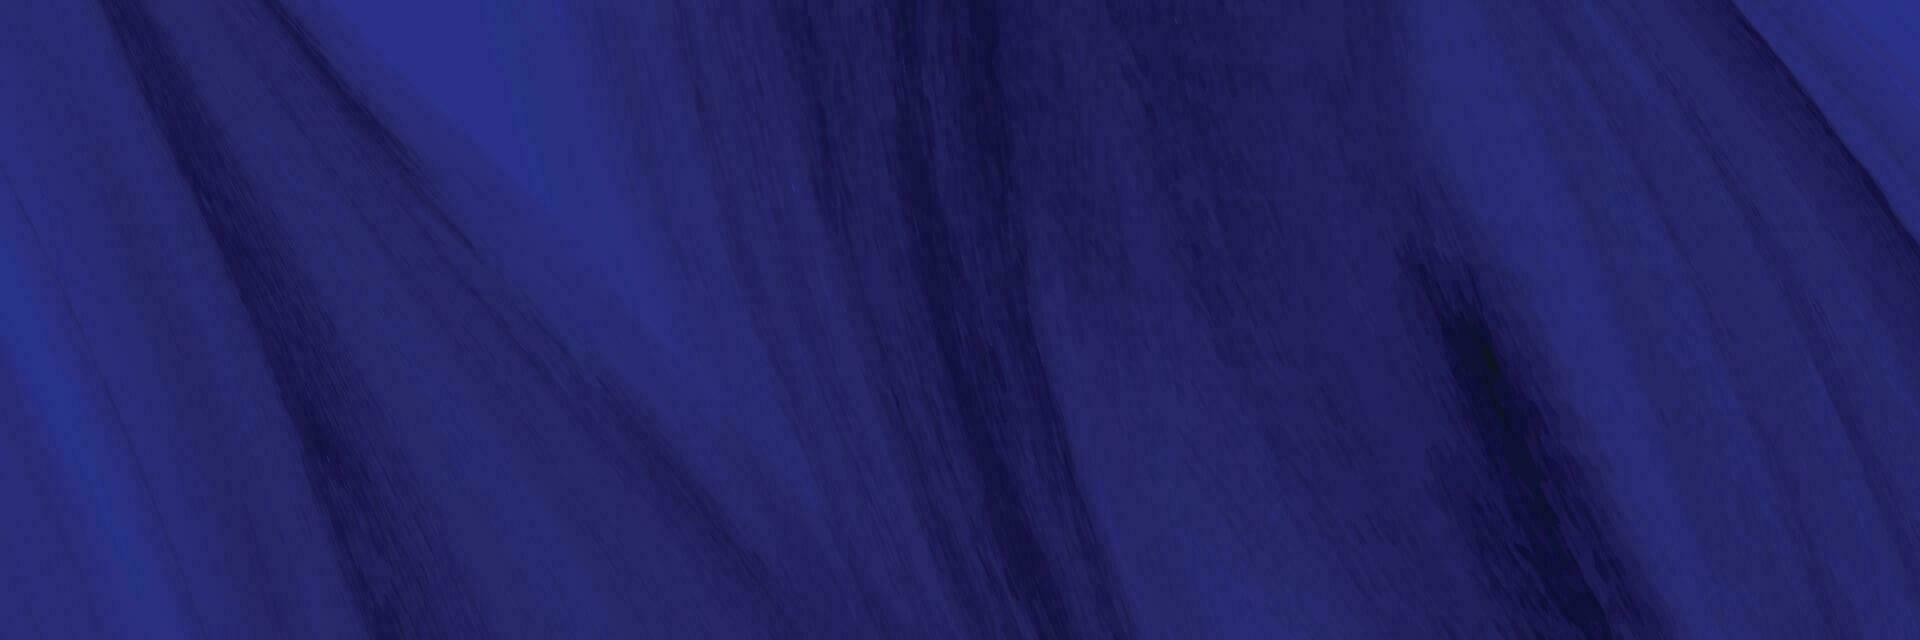 abstrato fundo com Sombrio azul entremeado ondas aguarela escova vetor